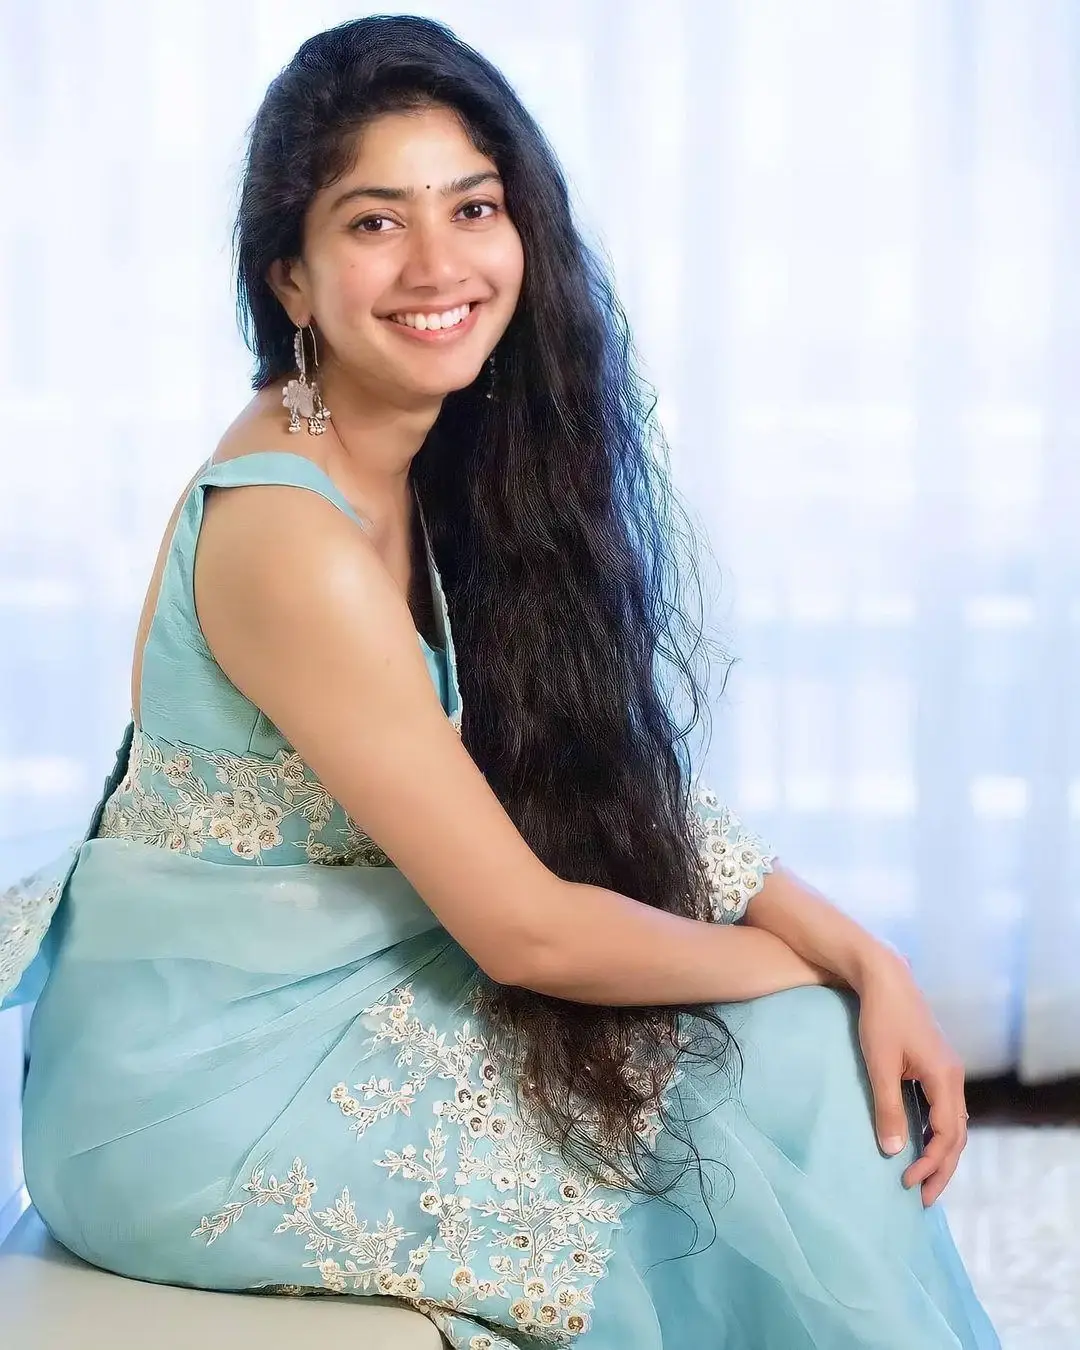 INDIAN GIRL SAI PALLAVI LONG HAIR IN SLEEVELESS BLUE SAREE 2